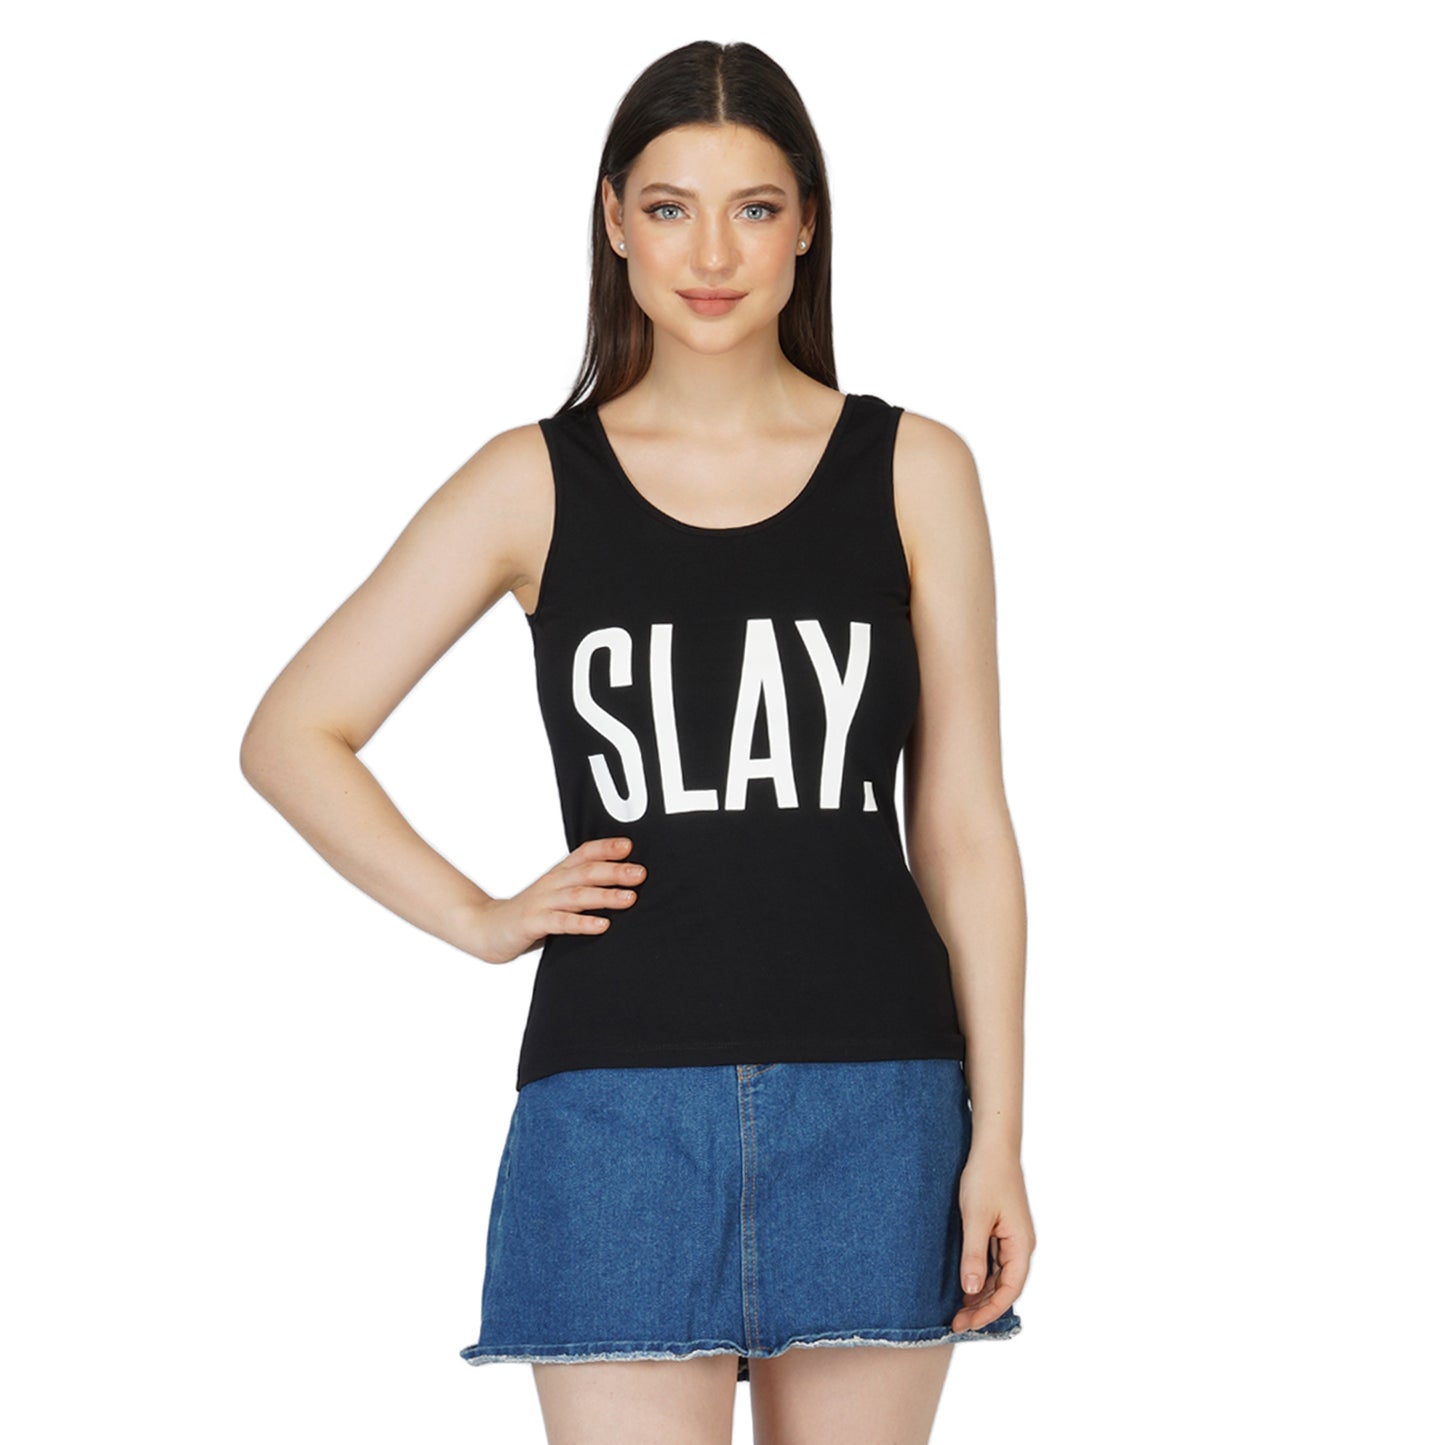 SLAY. Women's Black Printed Tank Top